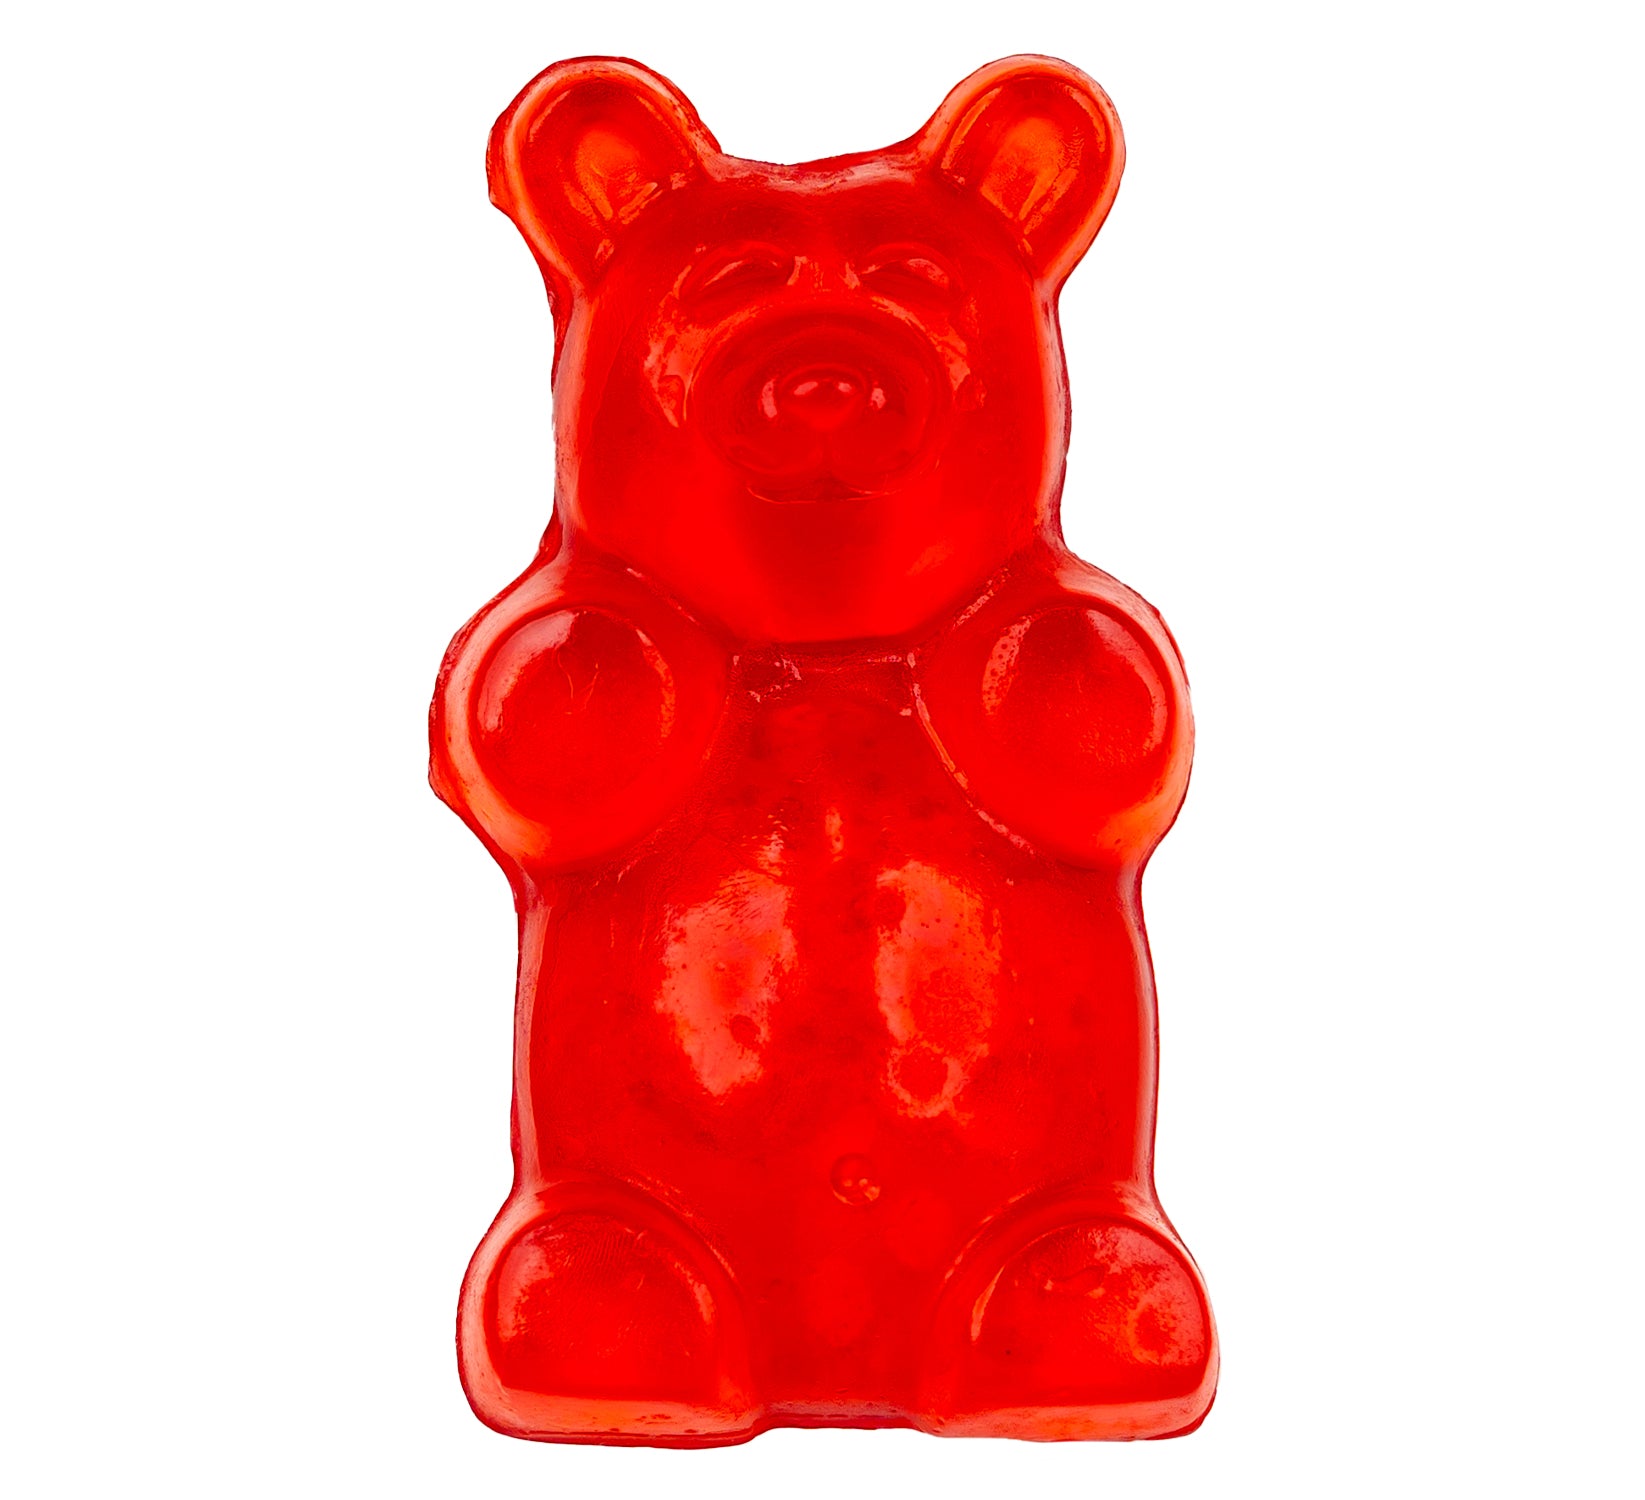 Giant Gummy Bear - 5oz